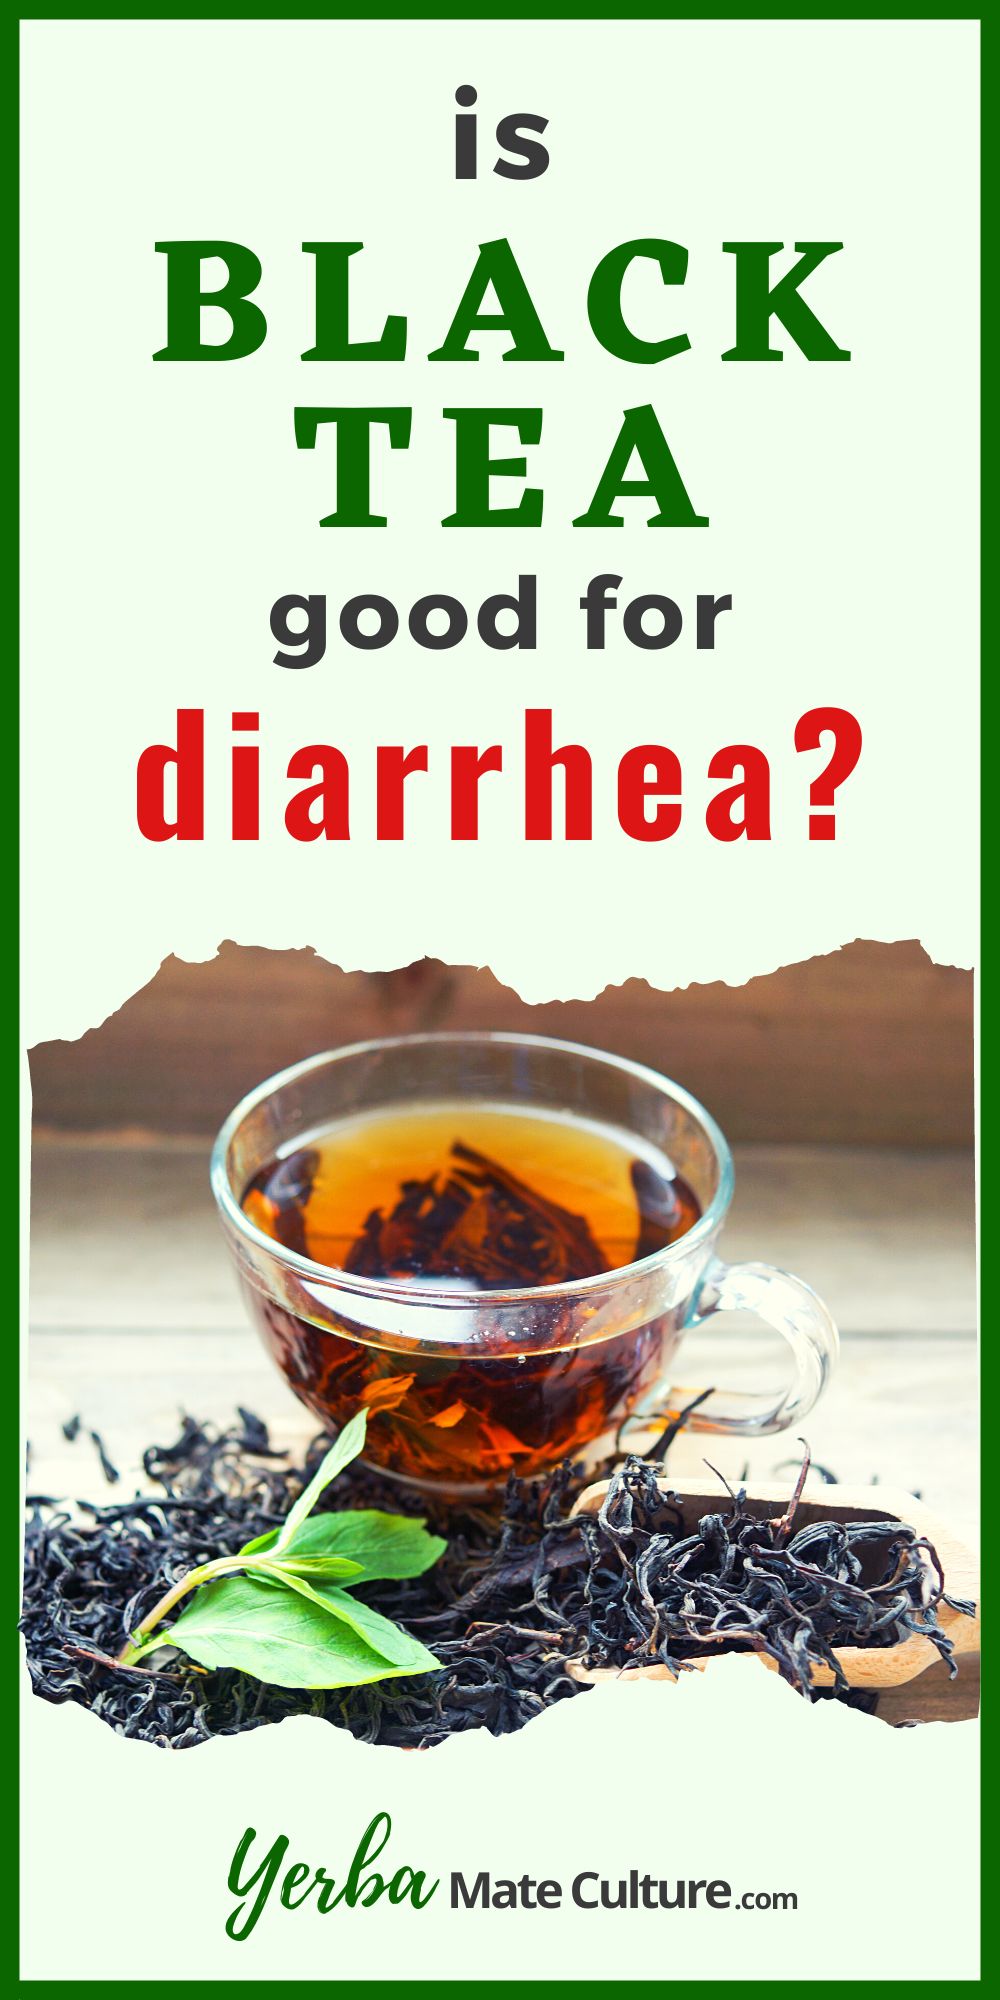 Black Tea for Diarrhea